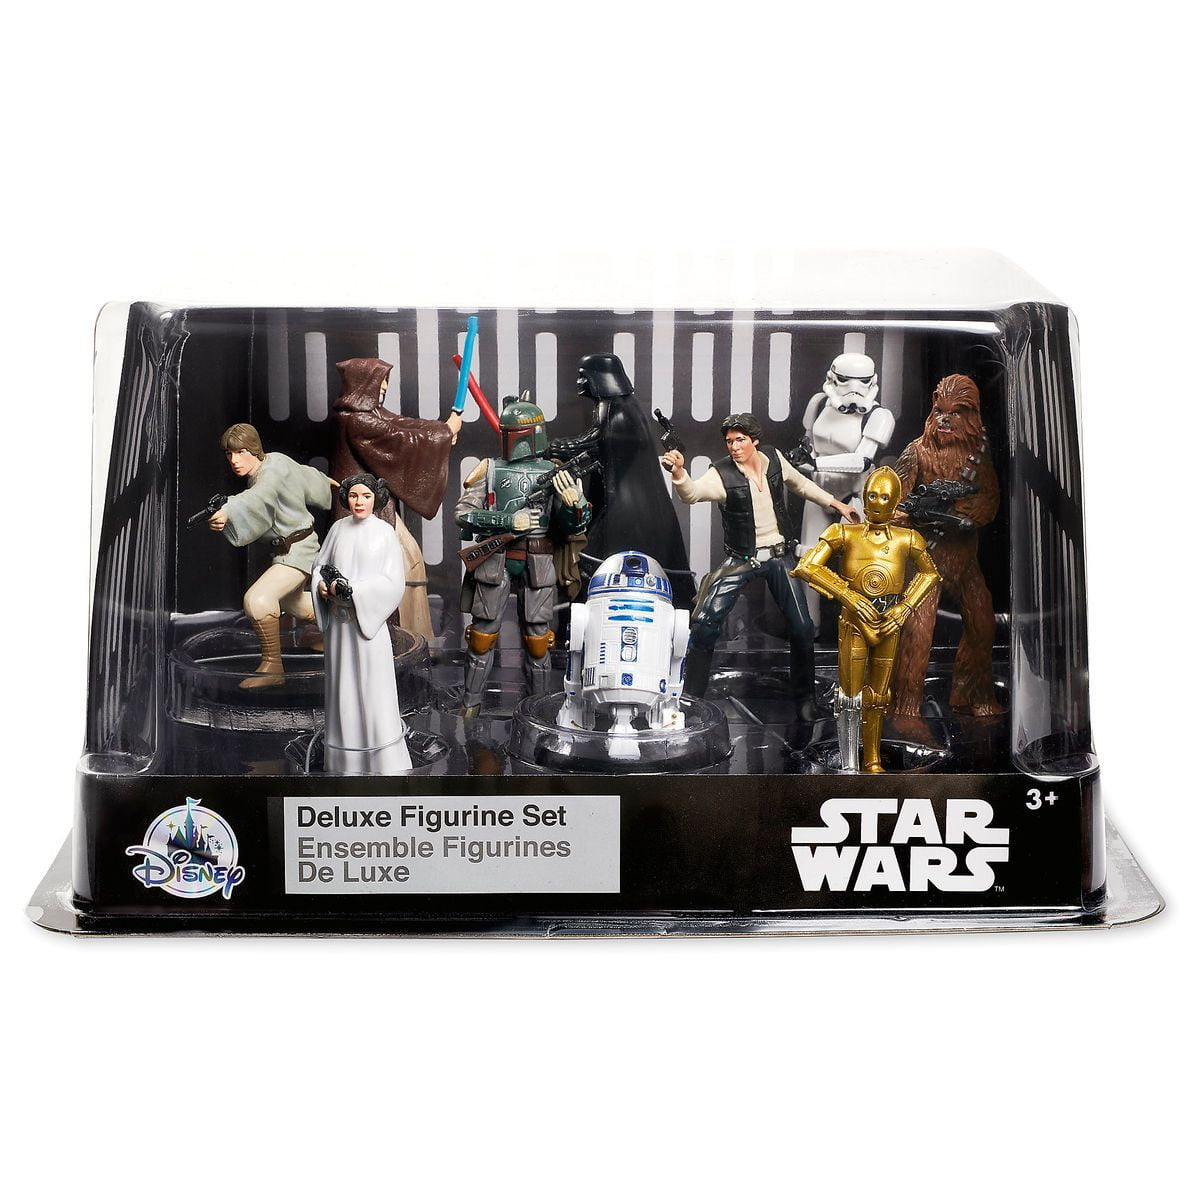 Disney Store Star Wars A New Hope Deluxe Figurine Set Figure Playset